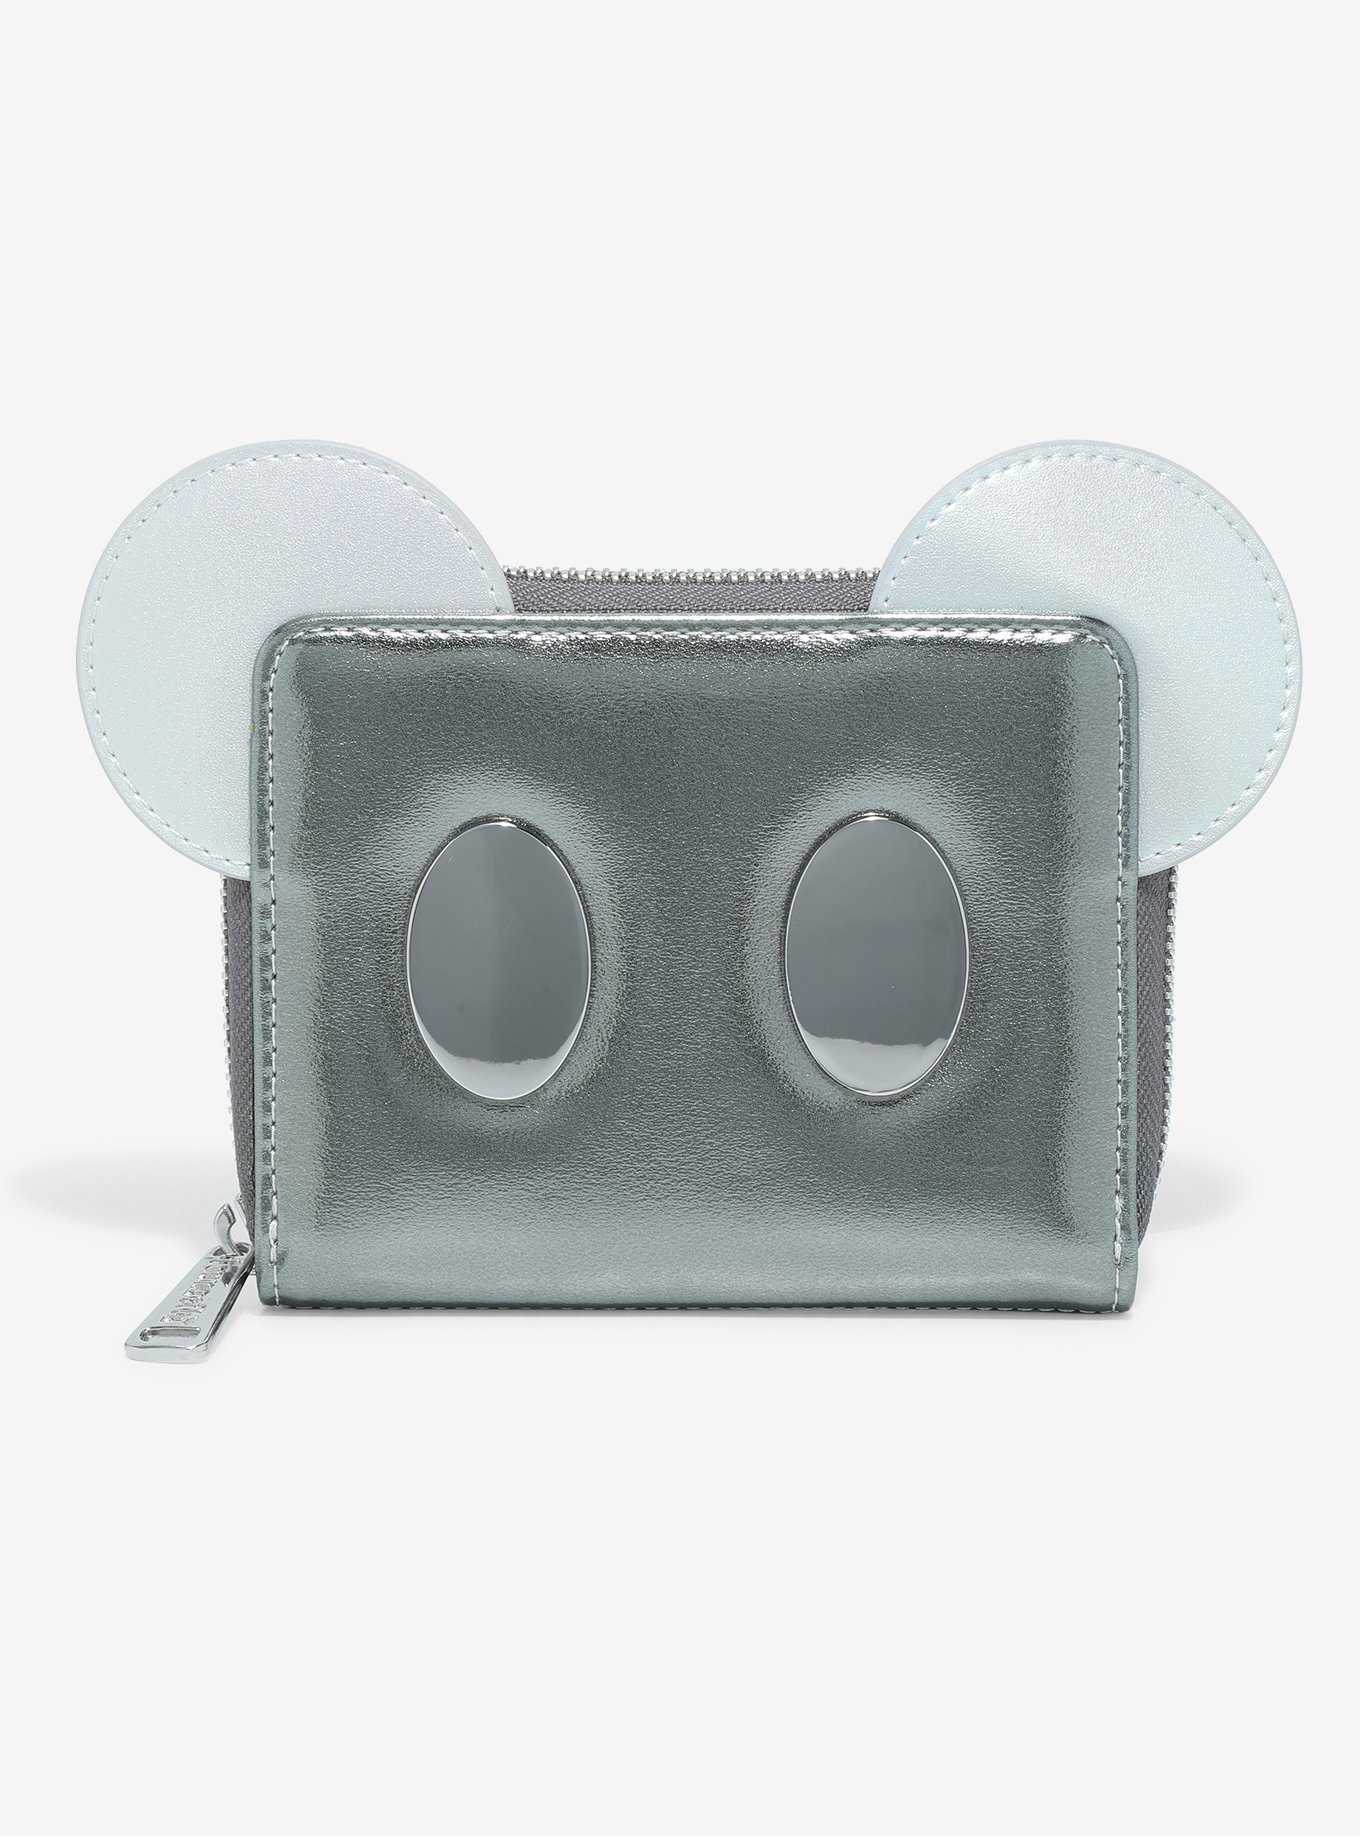 Loungefly Disney100 Mickey Mouse Platinum Mini Zipper Wallet, , hi-res